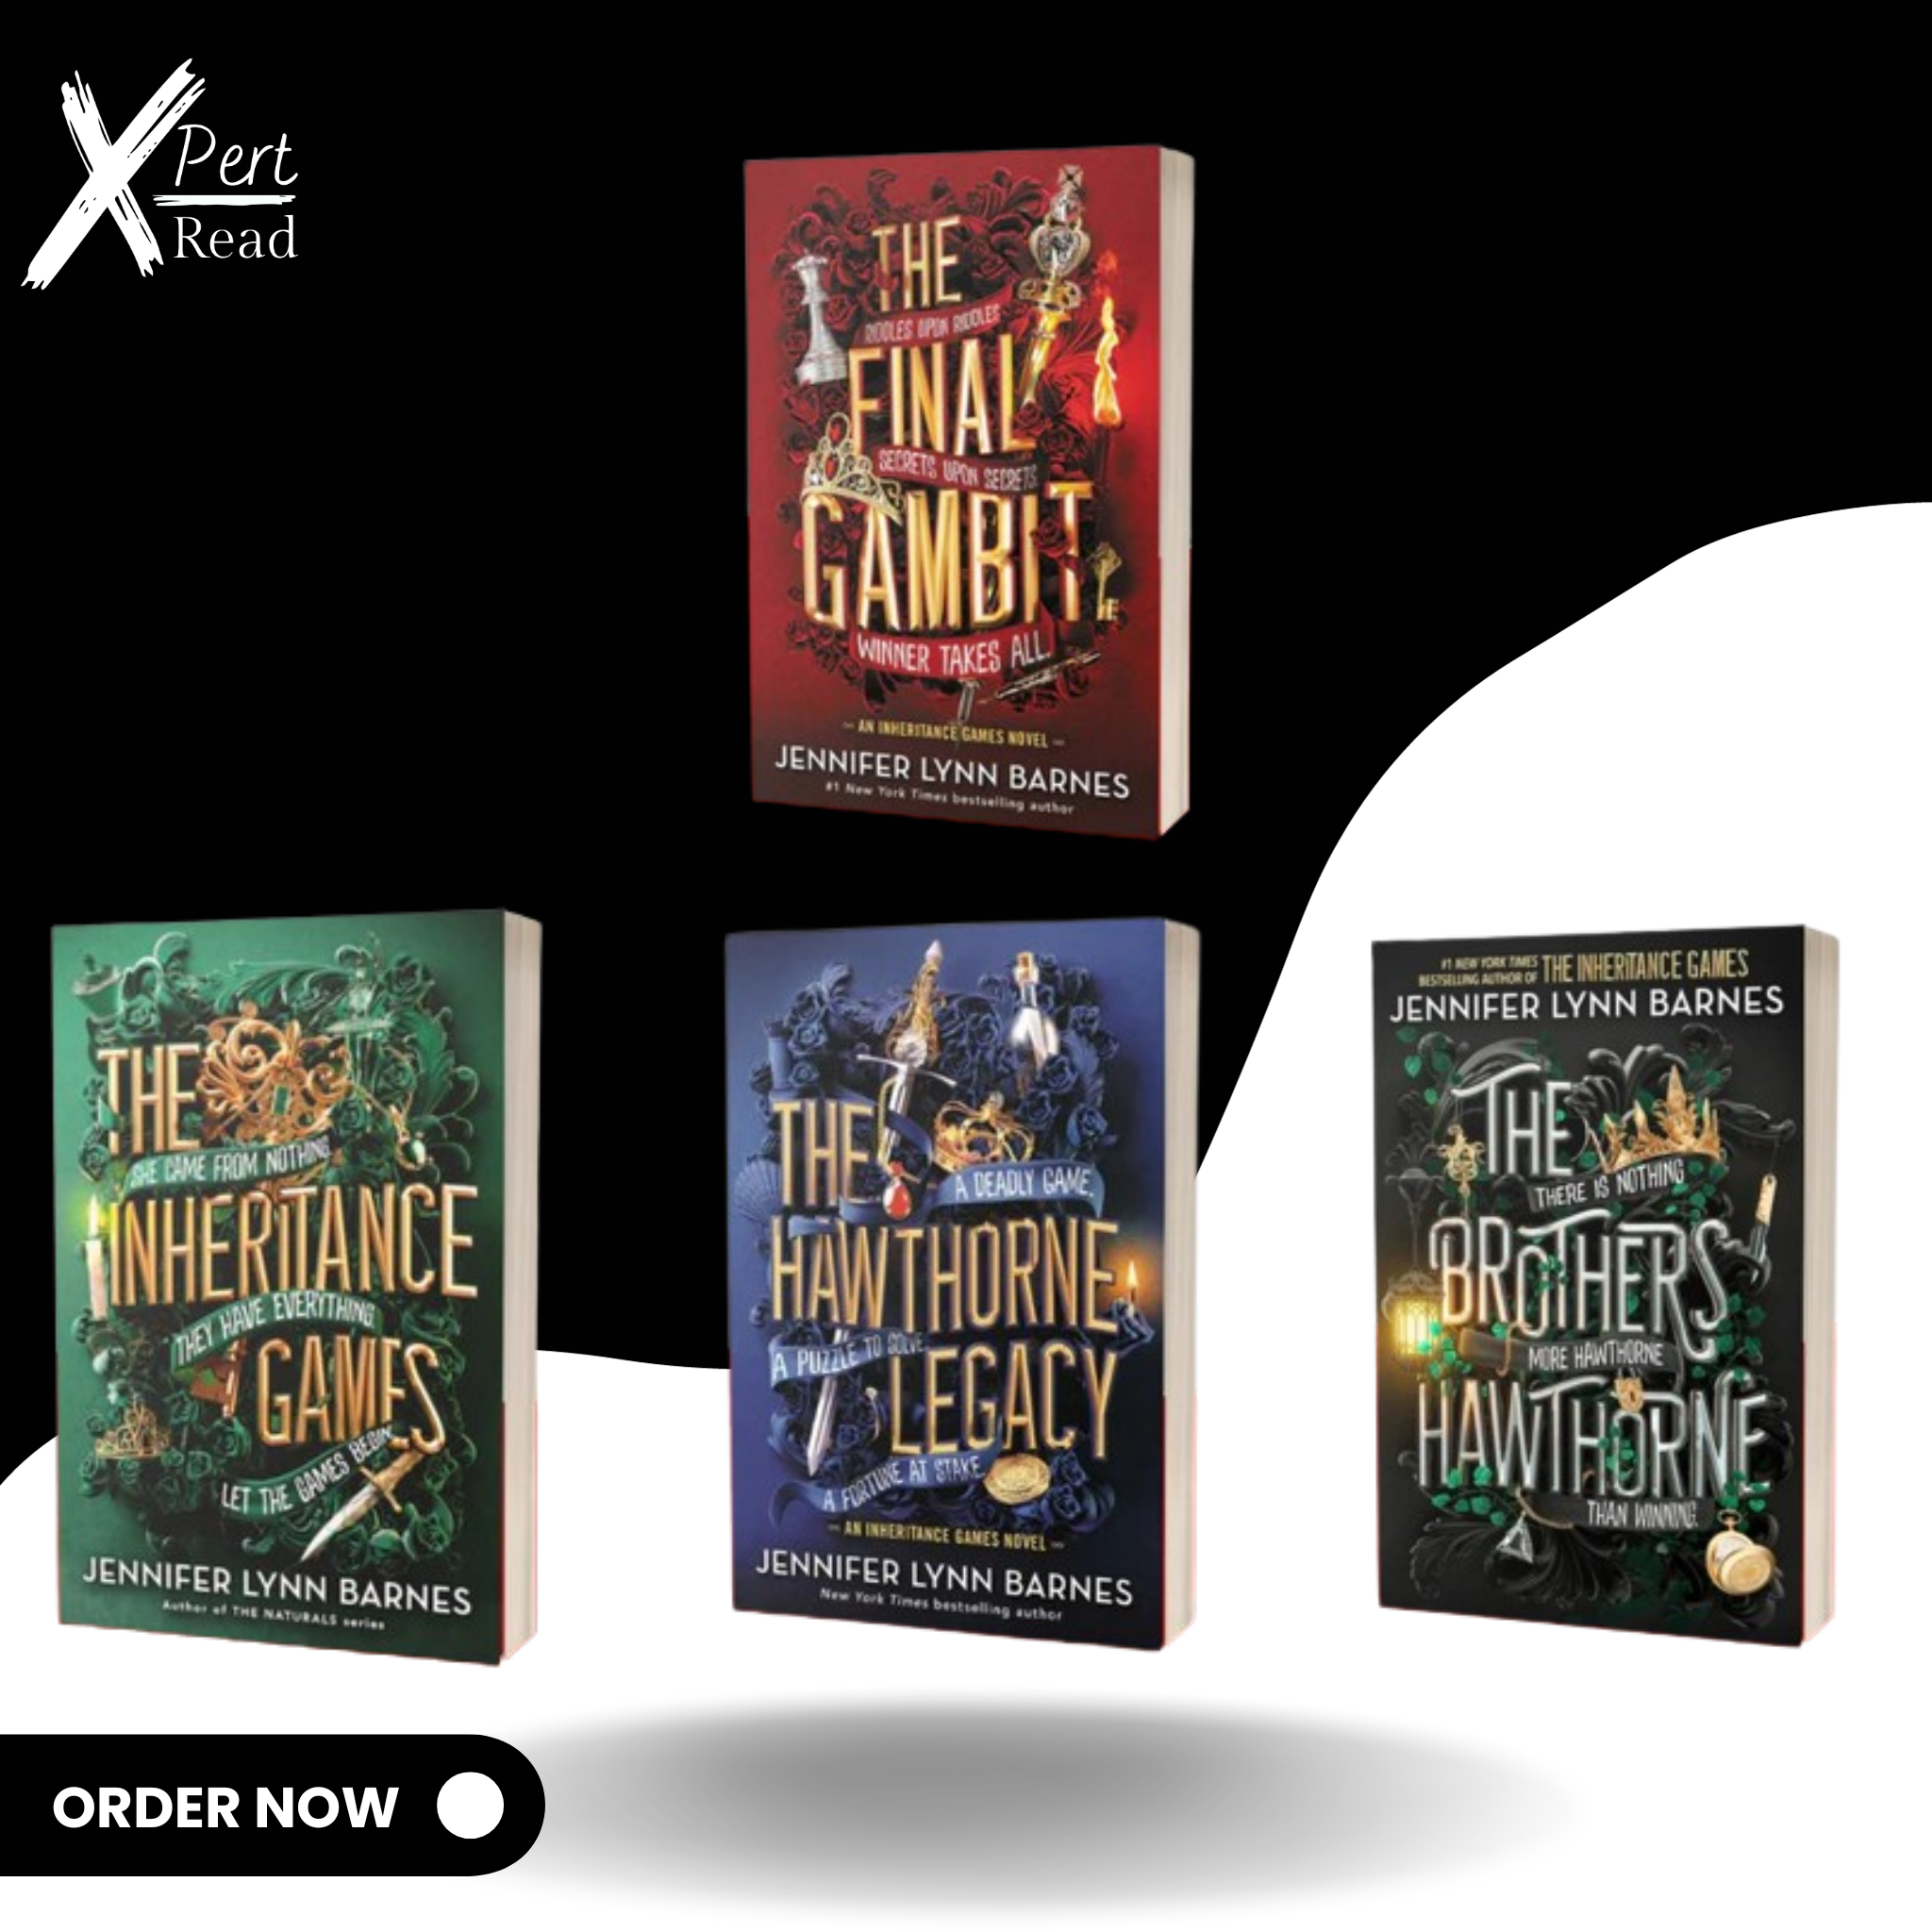 Set Of The Inheritance Games By JENNIFER LYNN BARNES (4 Books Set)